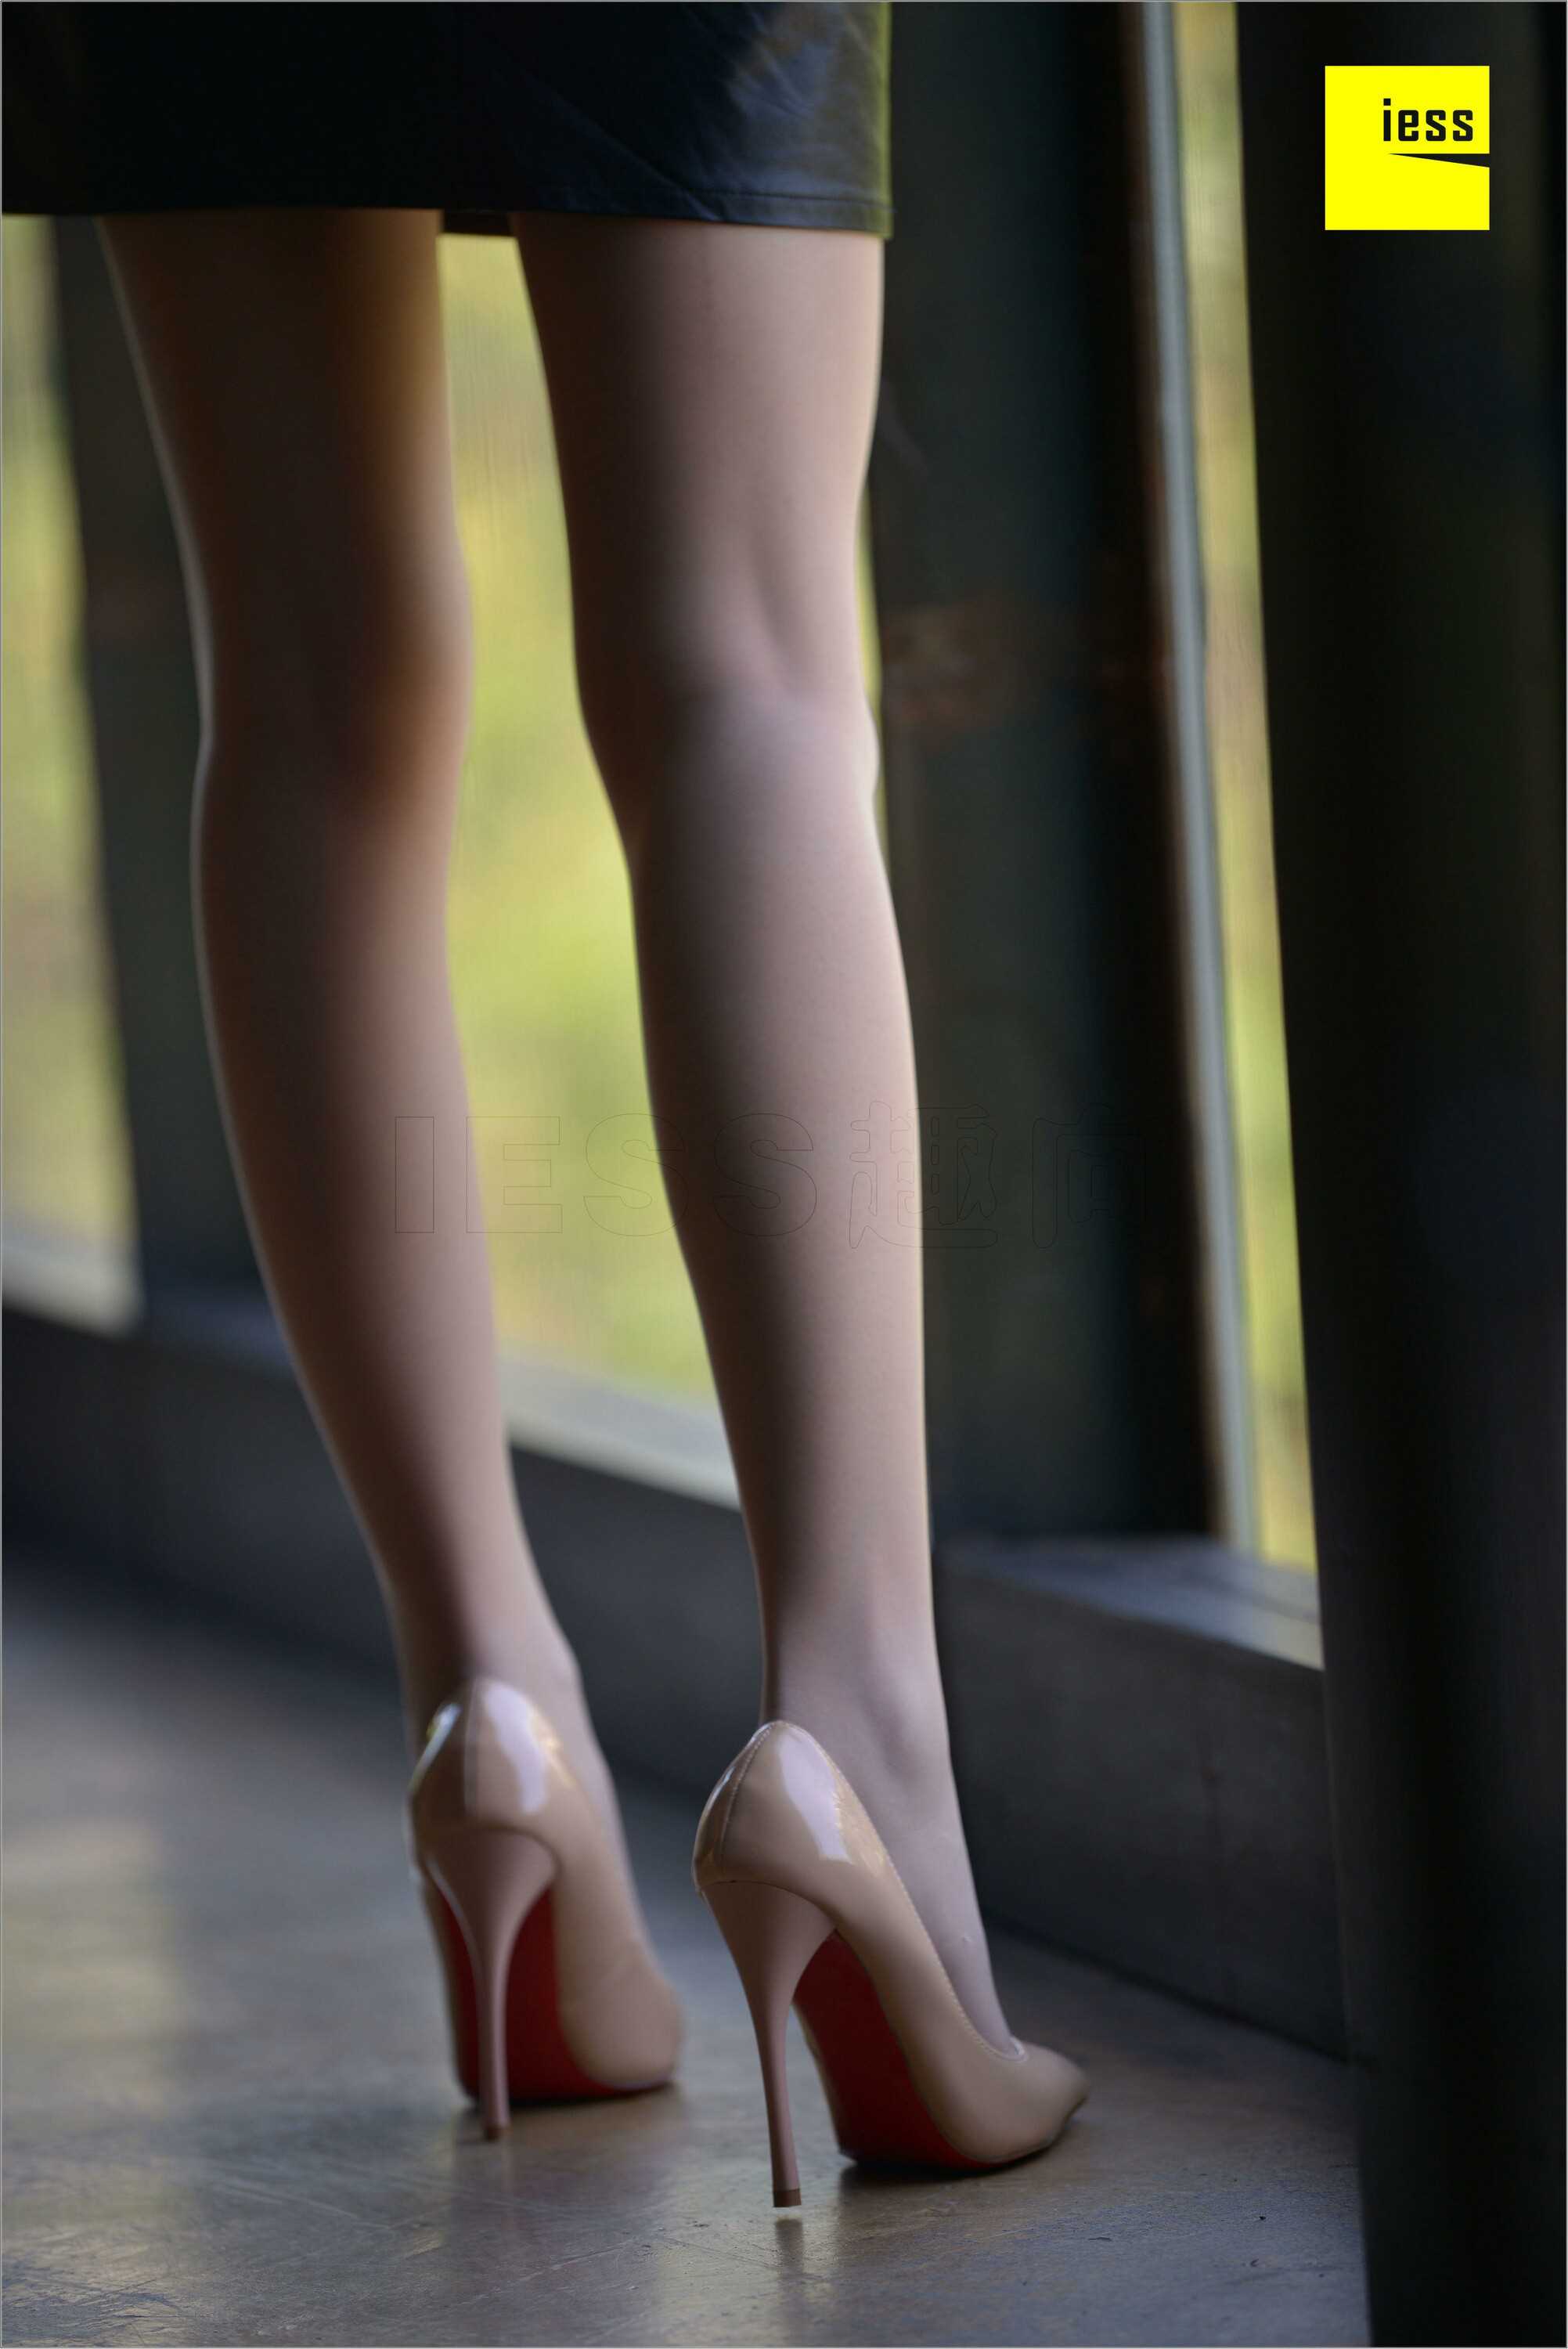 China Beauty Legs and feet 534